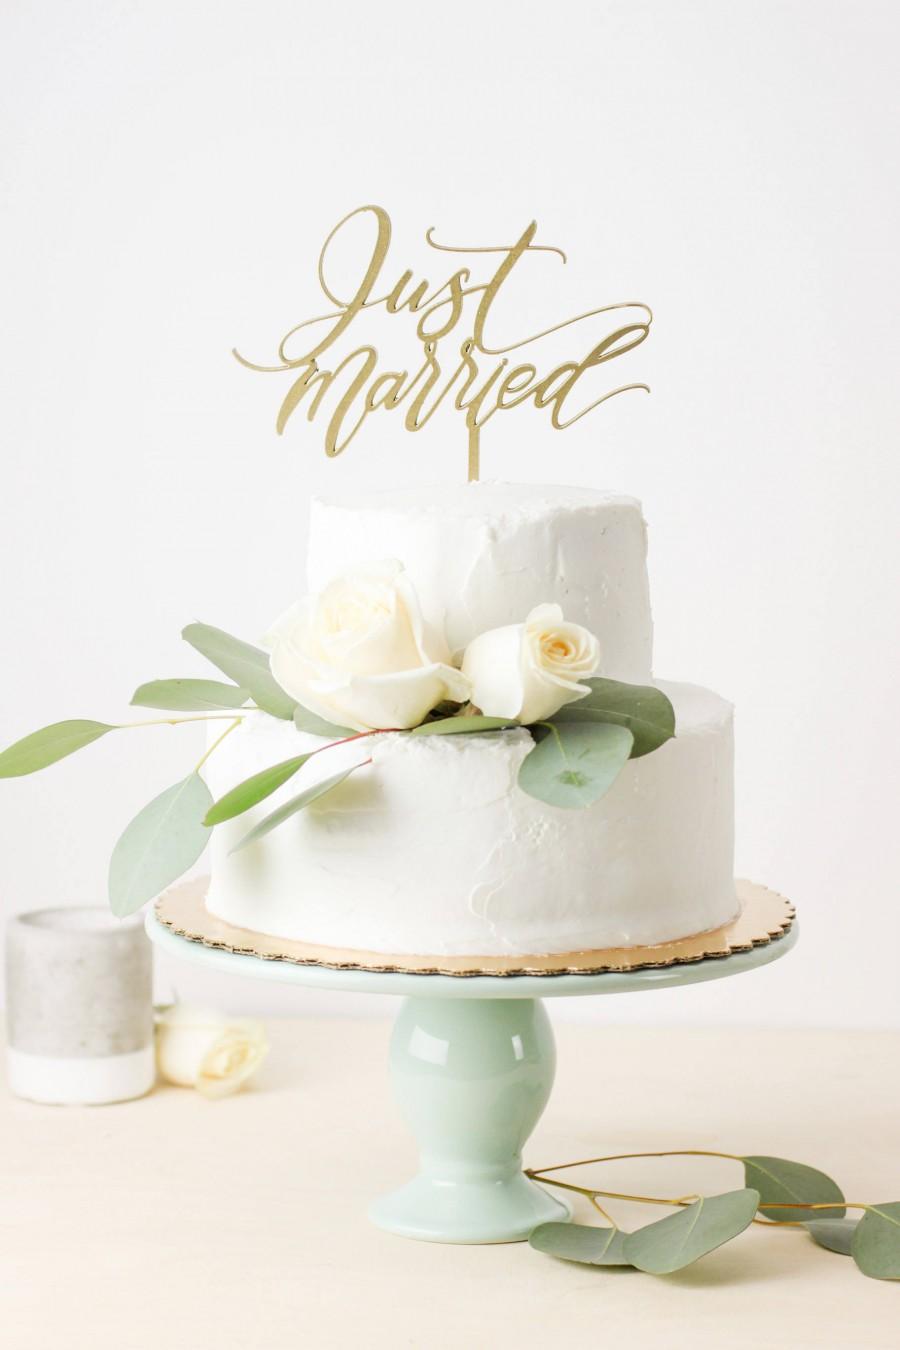 زفاف - Just Married Cake Topper - Wedding Cake Topper - Laser Cut Wood or Acrylic - 6.25 inches wide